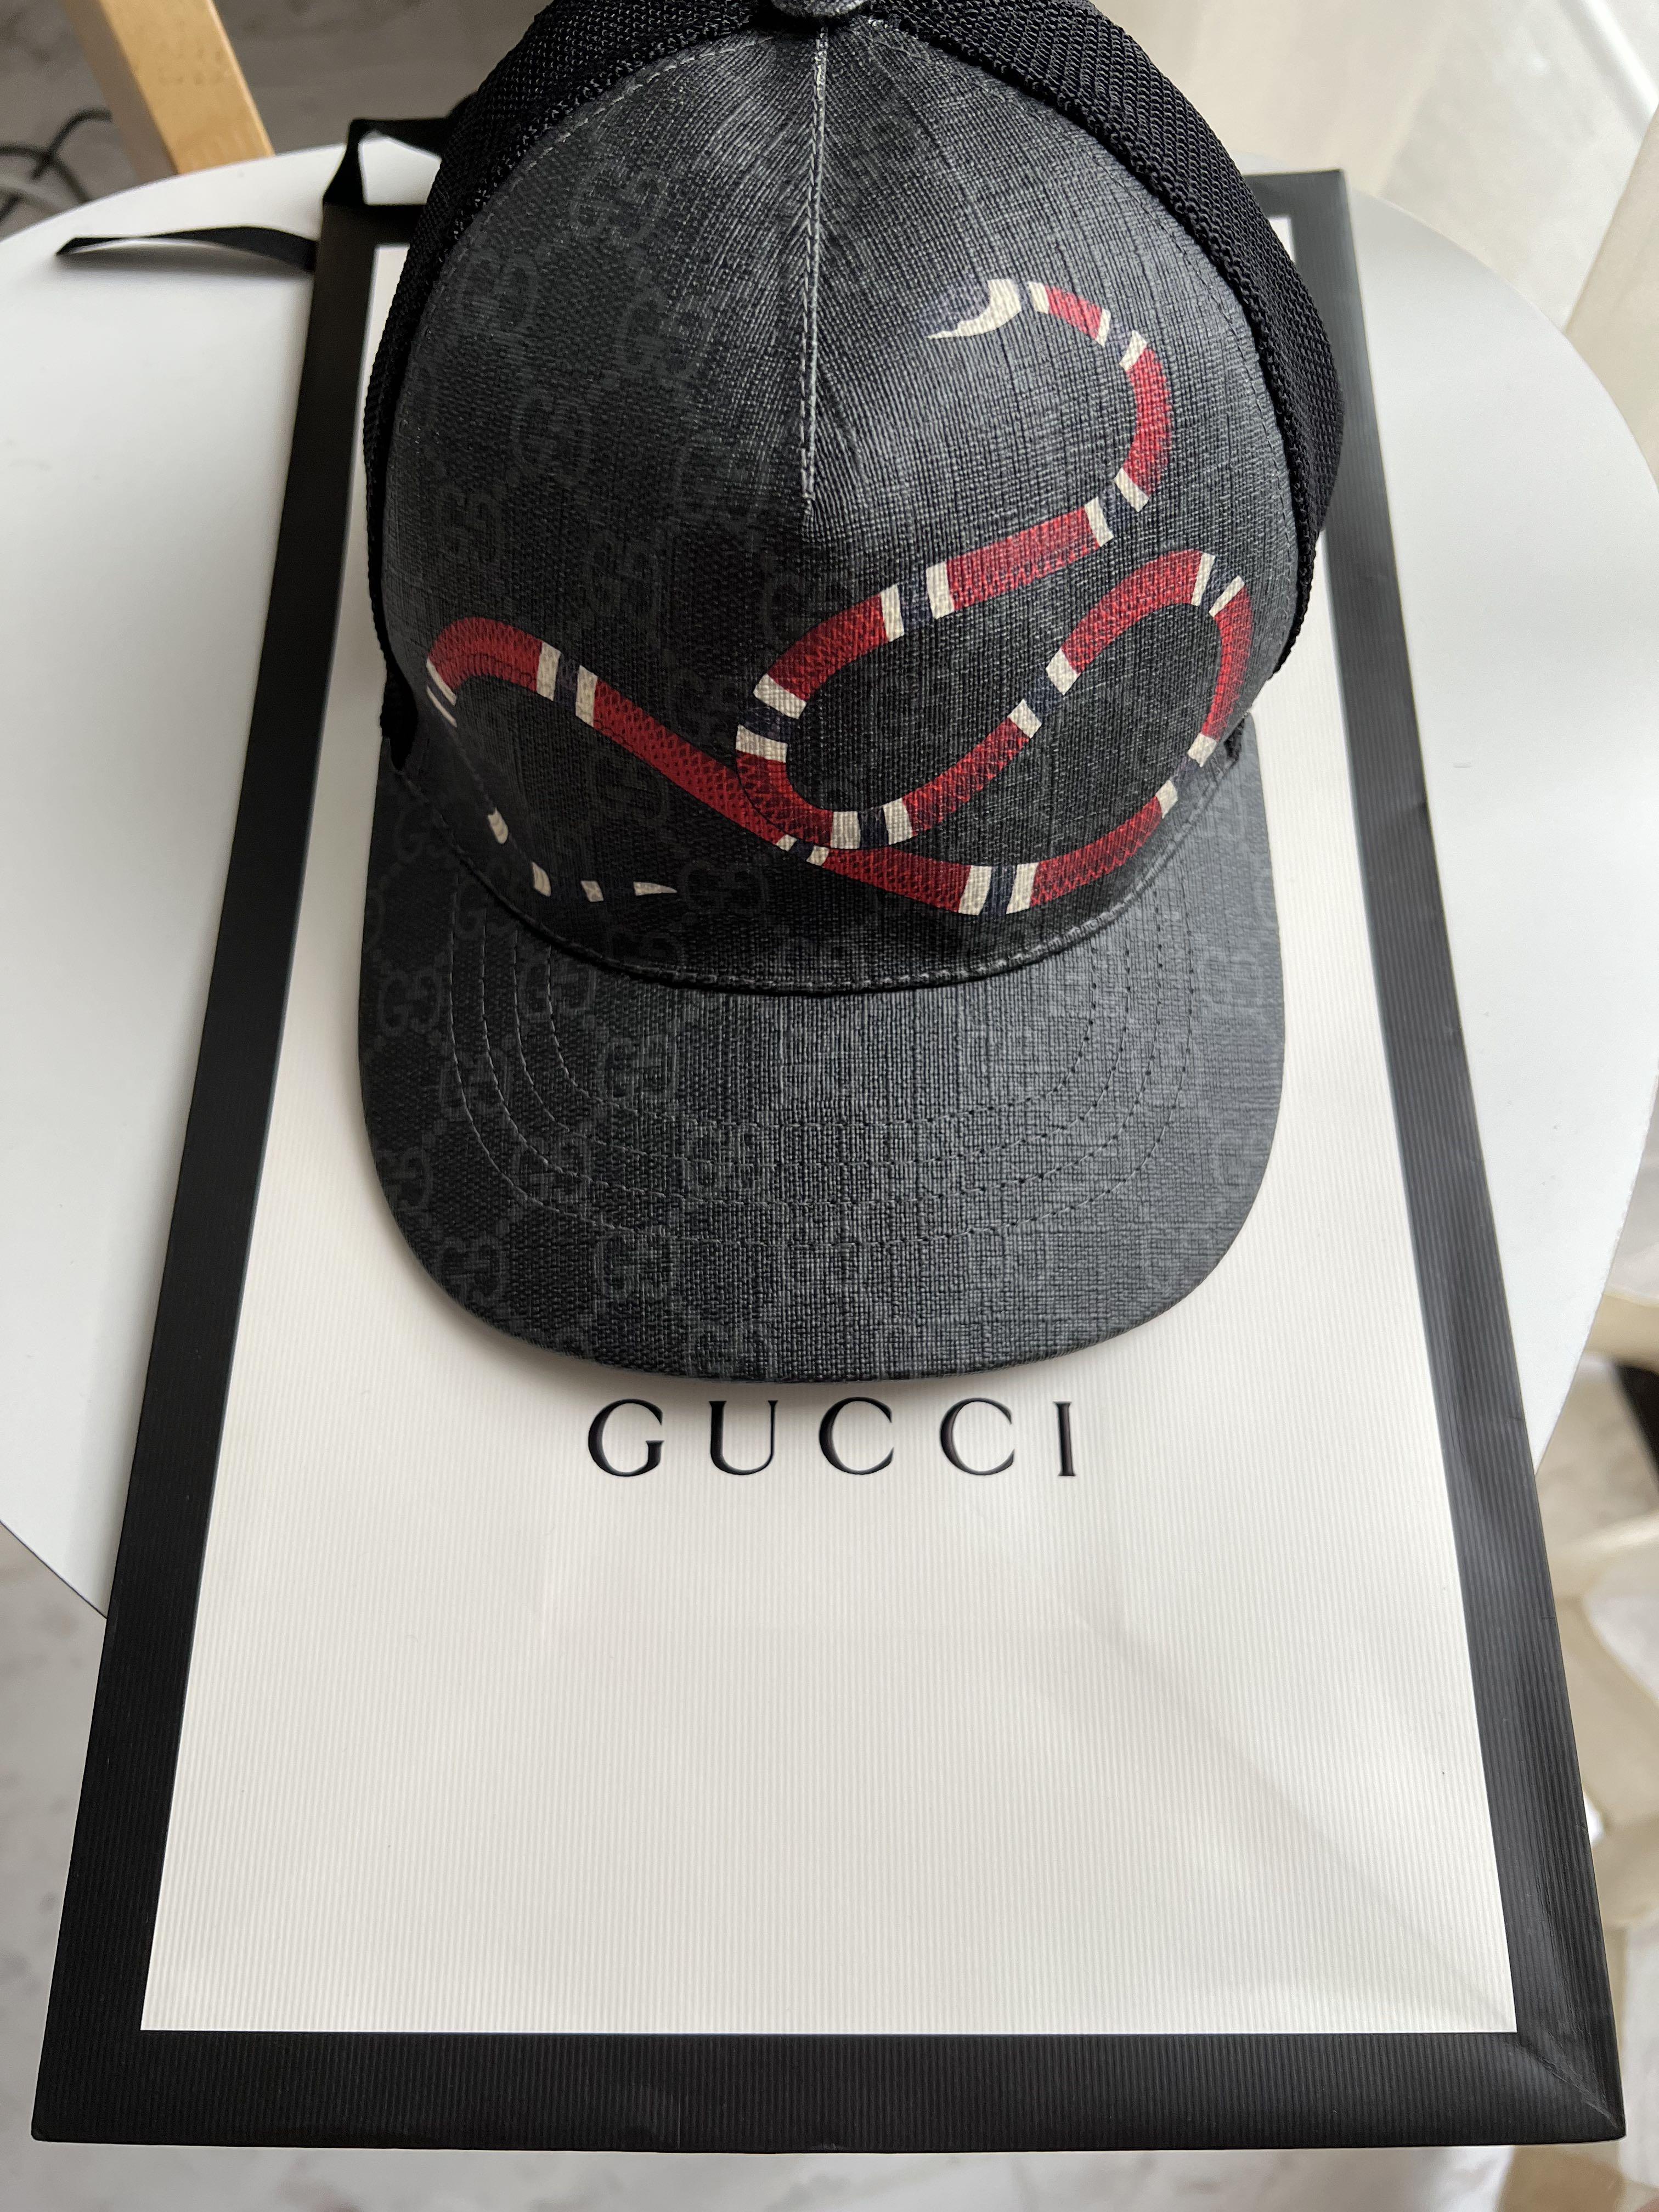 Real v fake Gucci black king snake cap.. 